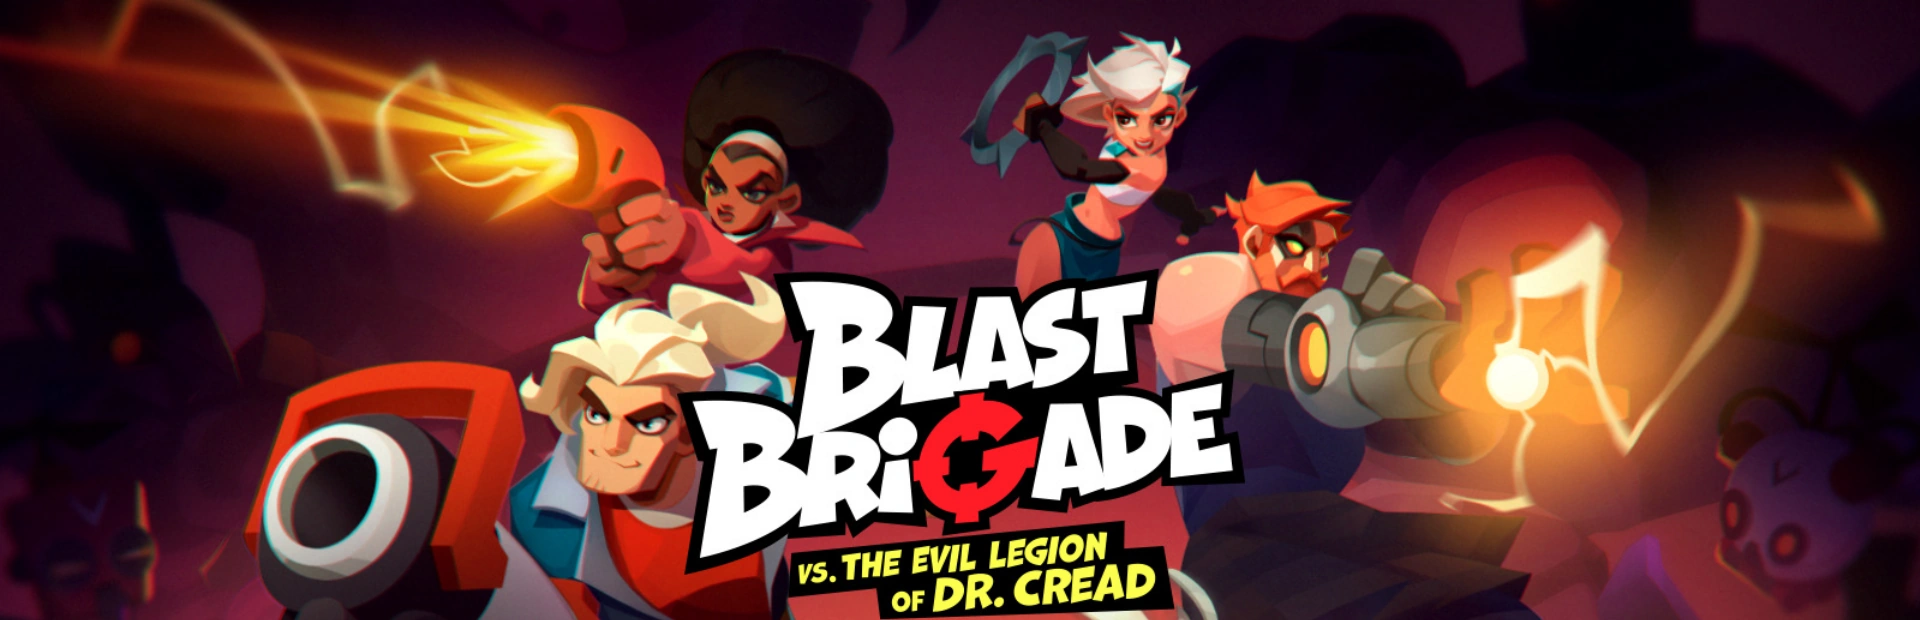 Blast.Brigade.vs .the .Evil .Legion.of .Dr .Cread .banner3